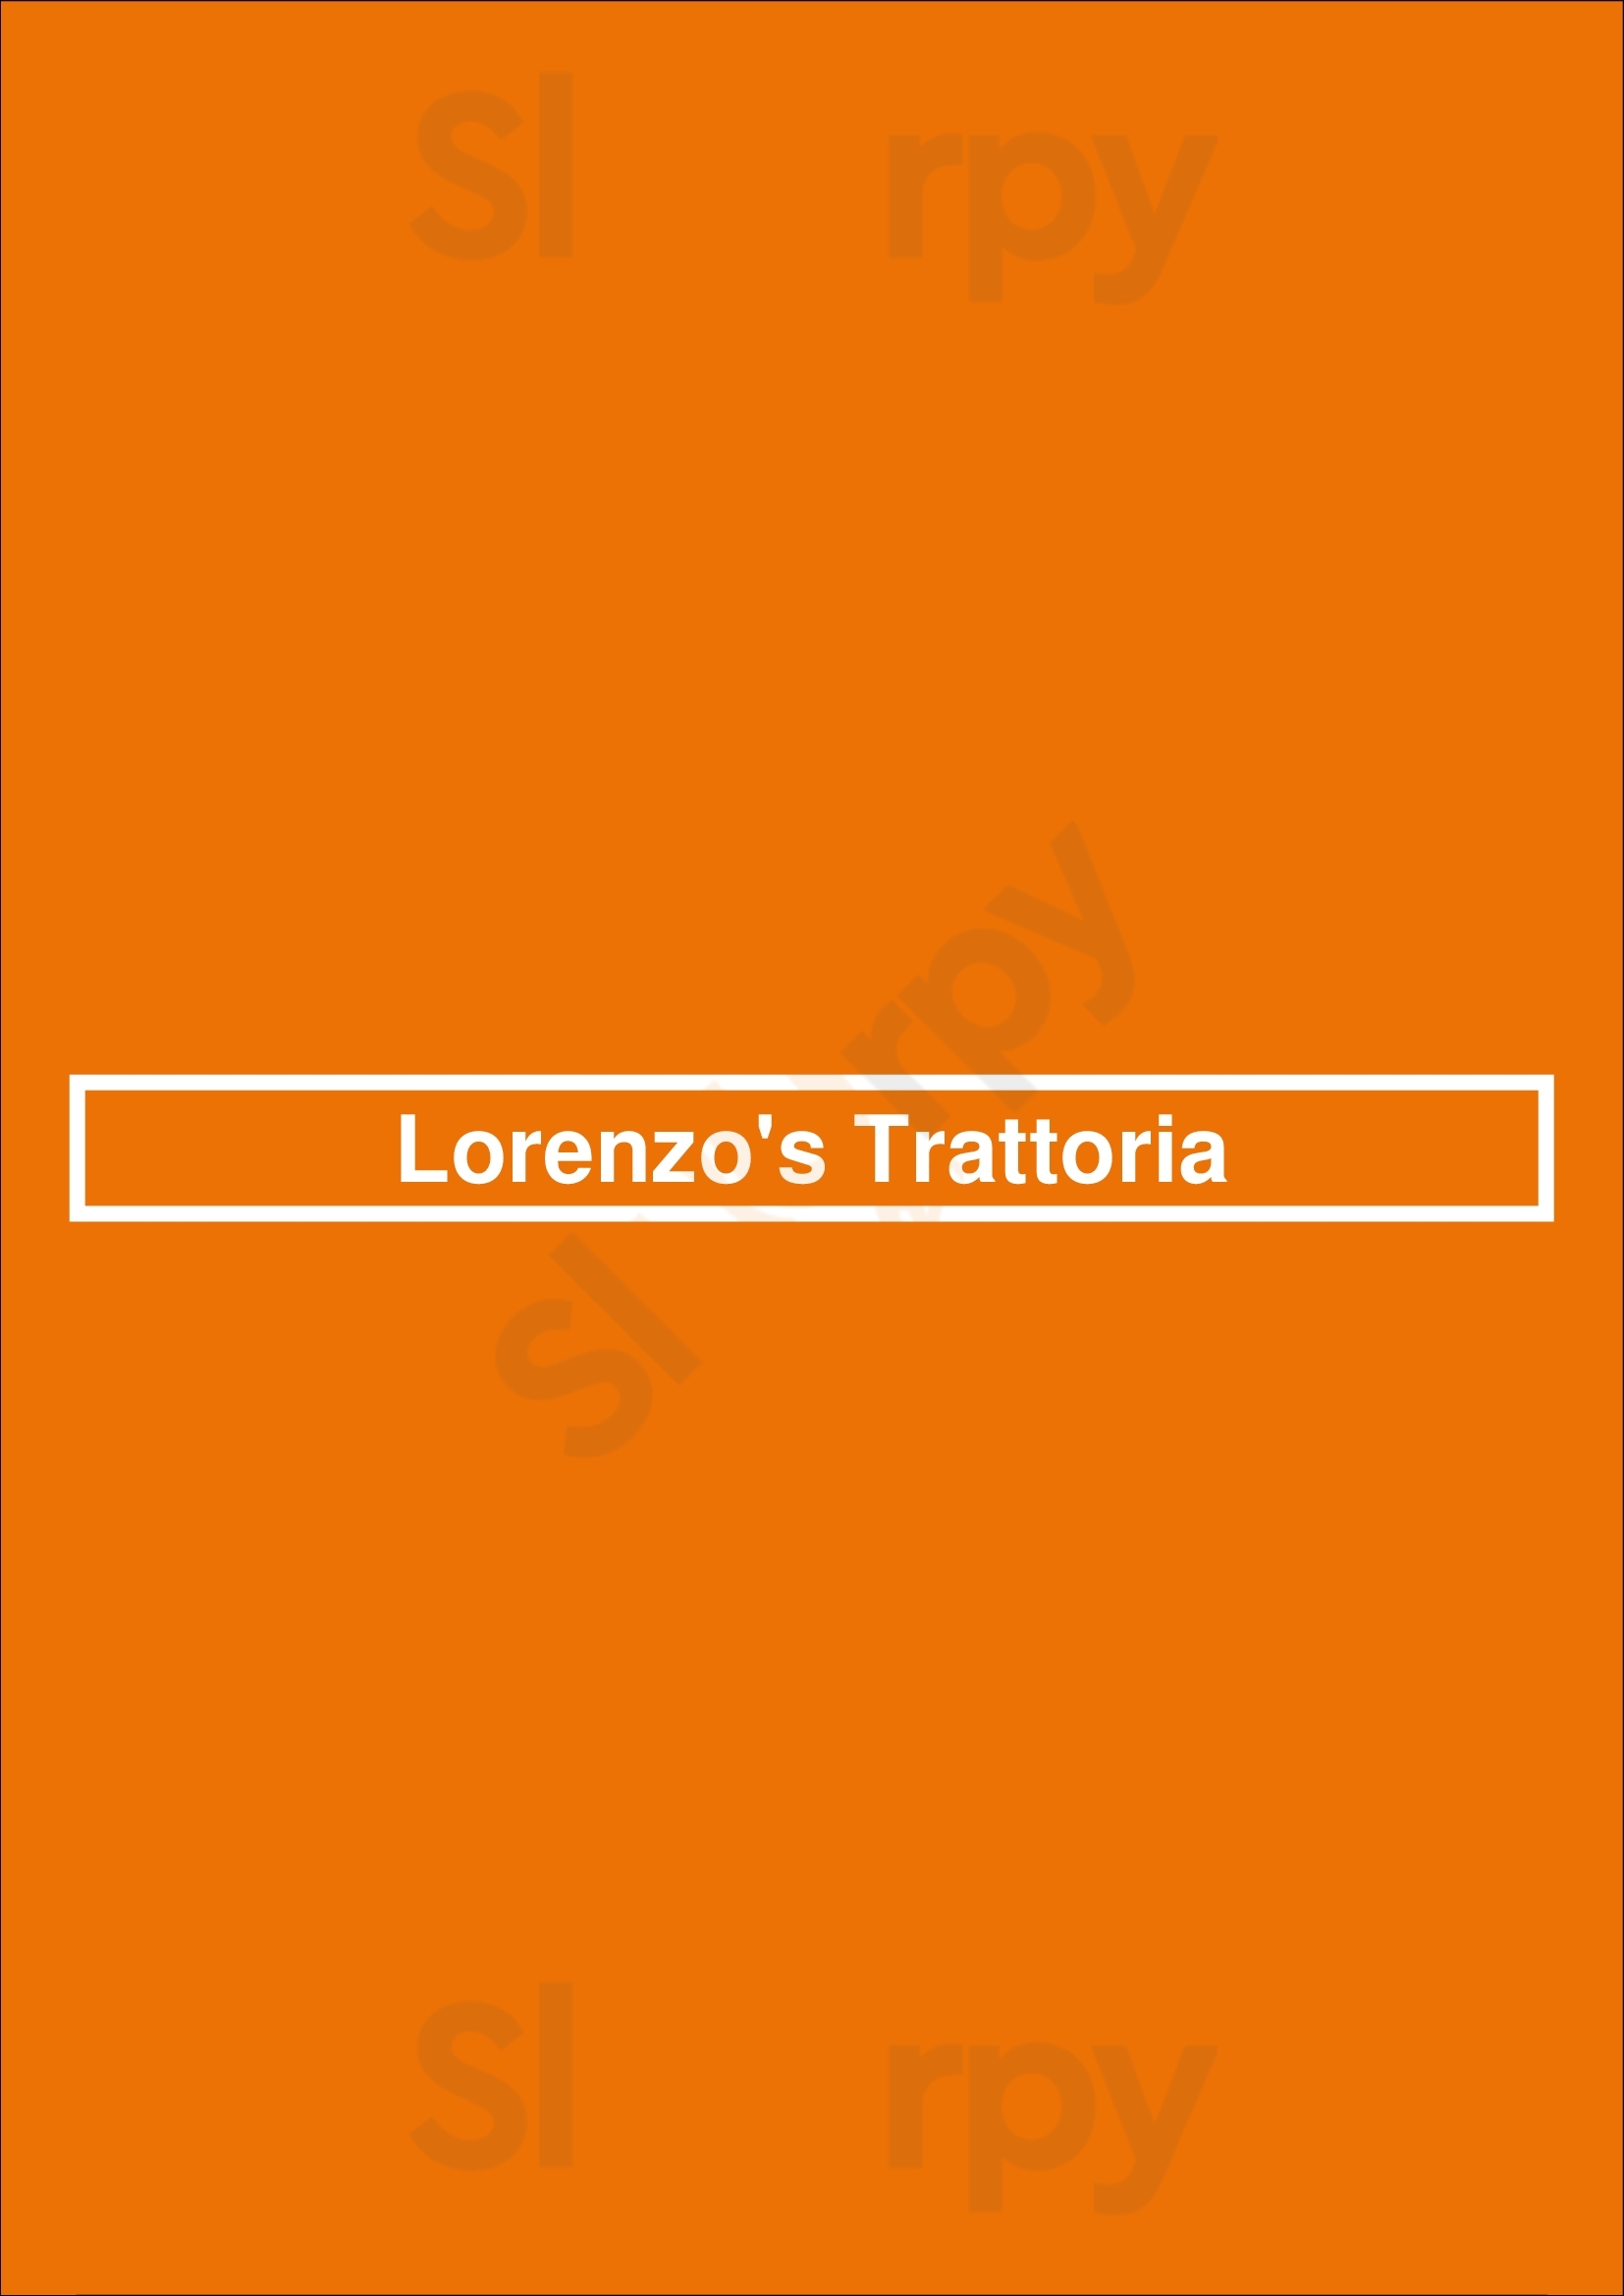 Lorenzo's Trattoria Saint Louis Menu - 1